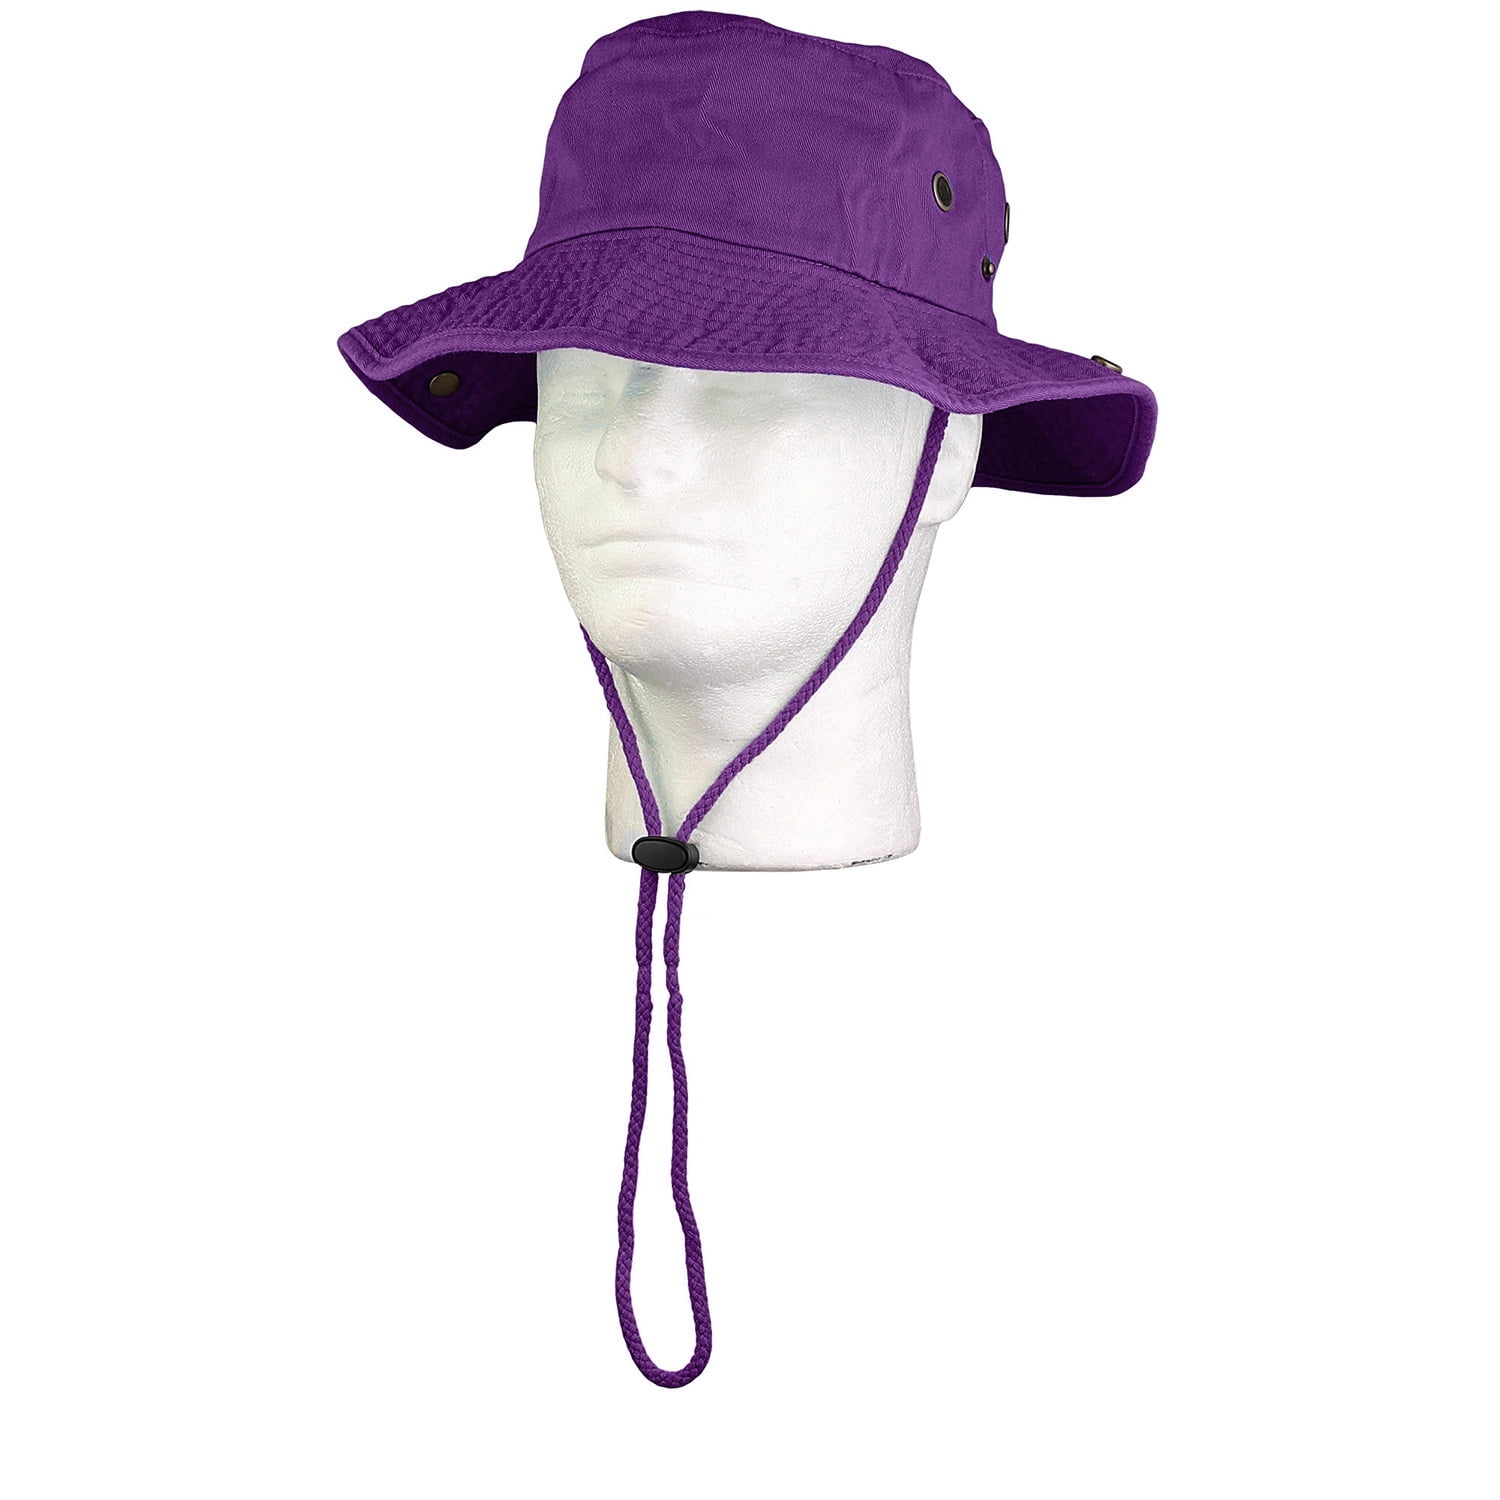 Wide Brim Hiking Fishing Safari Boonie Bucket Hats 100% Cotton UV